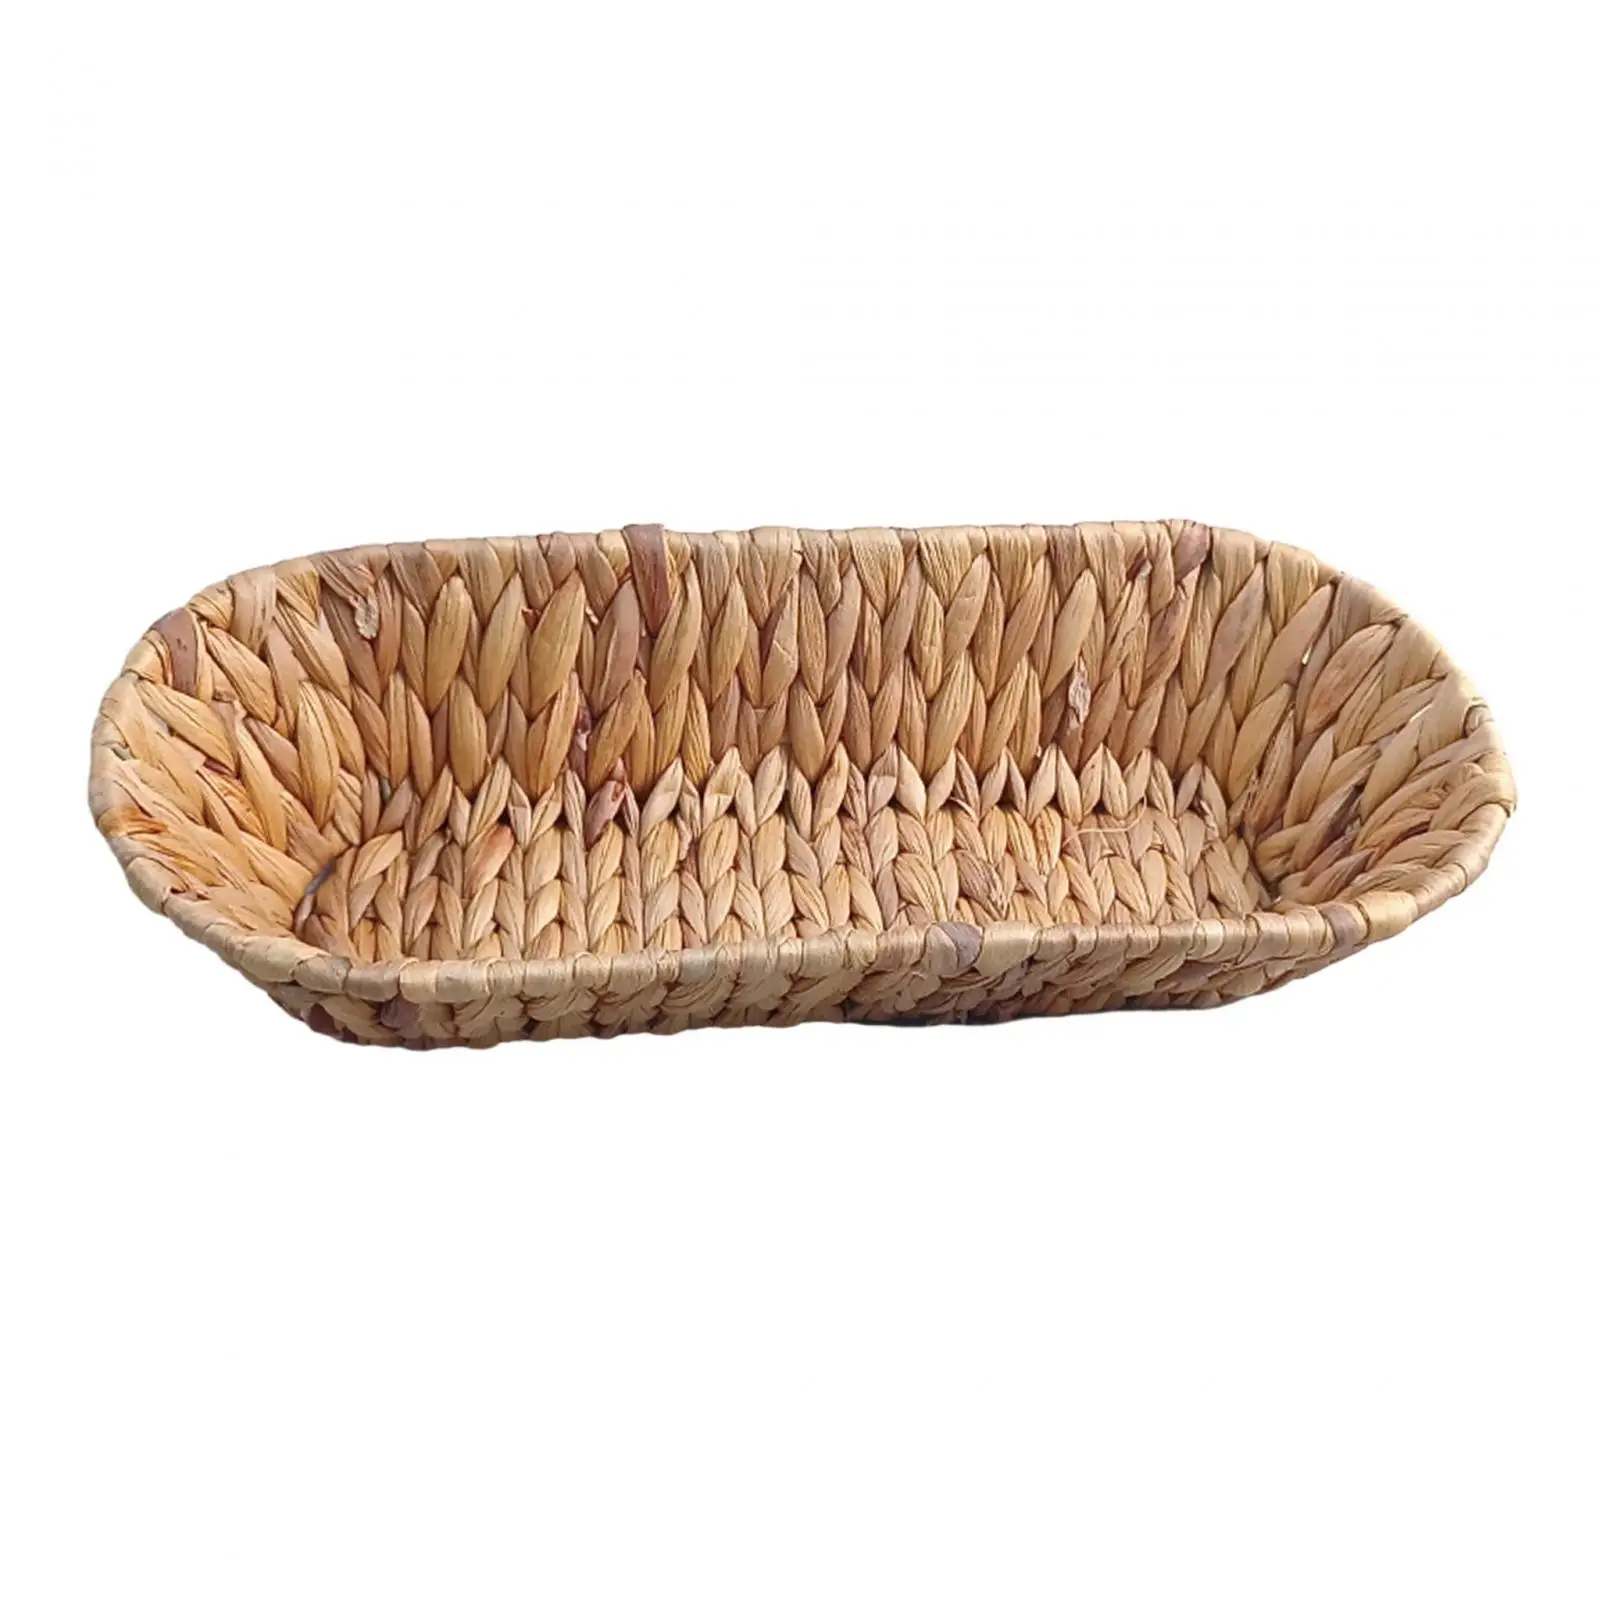 Handwoven Grass Rattan Bread Basket Serving Organizer Multipurpose 12.6x5x2.8inch for Kitchen Counter Lightweight Sturdy